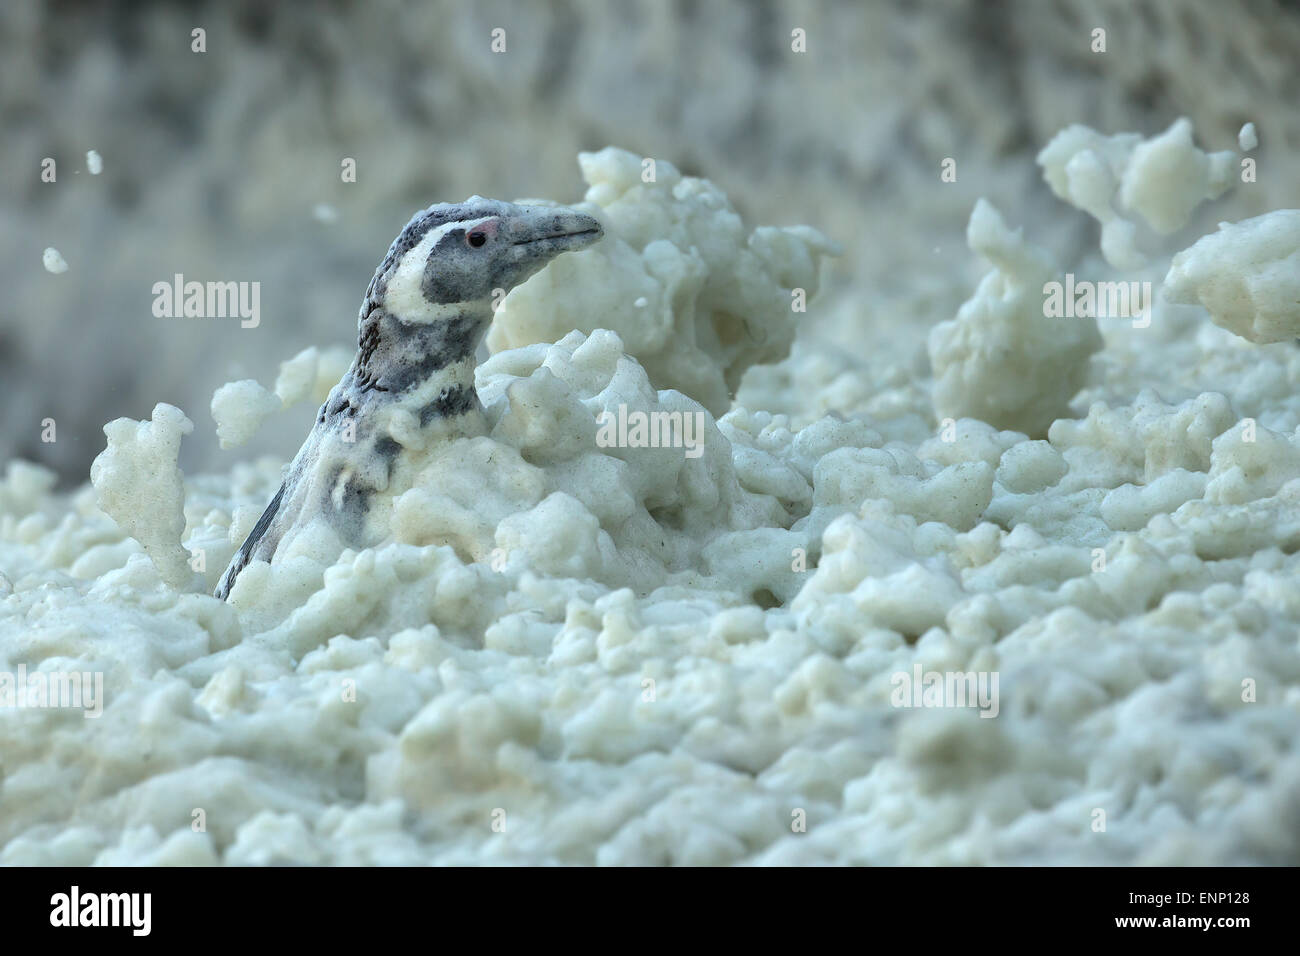 Magellanic penguin schiumoso in acqua di mare Foto Stock